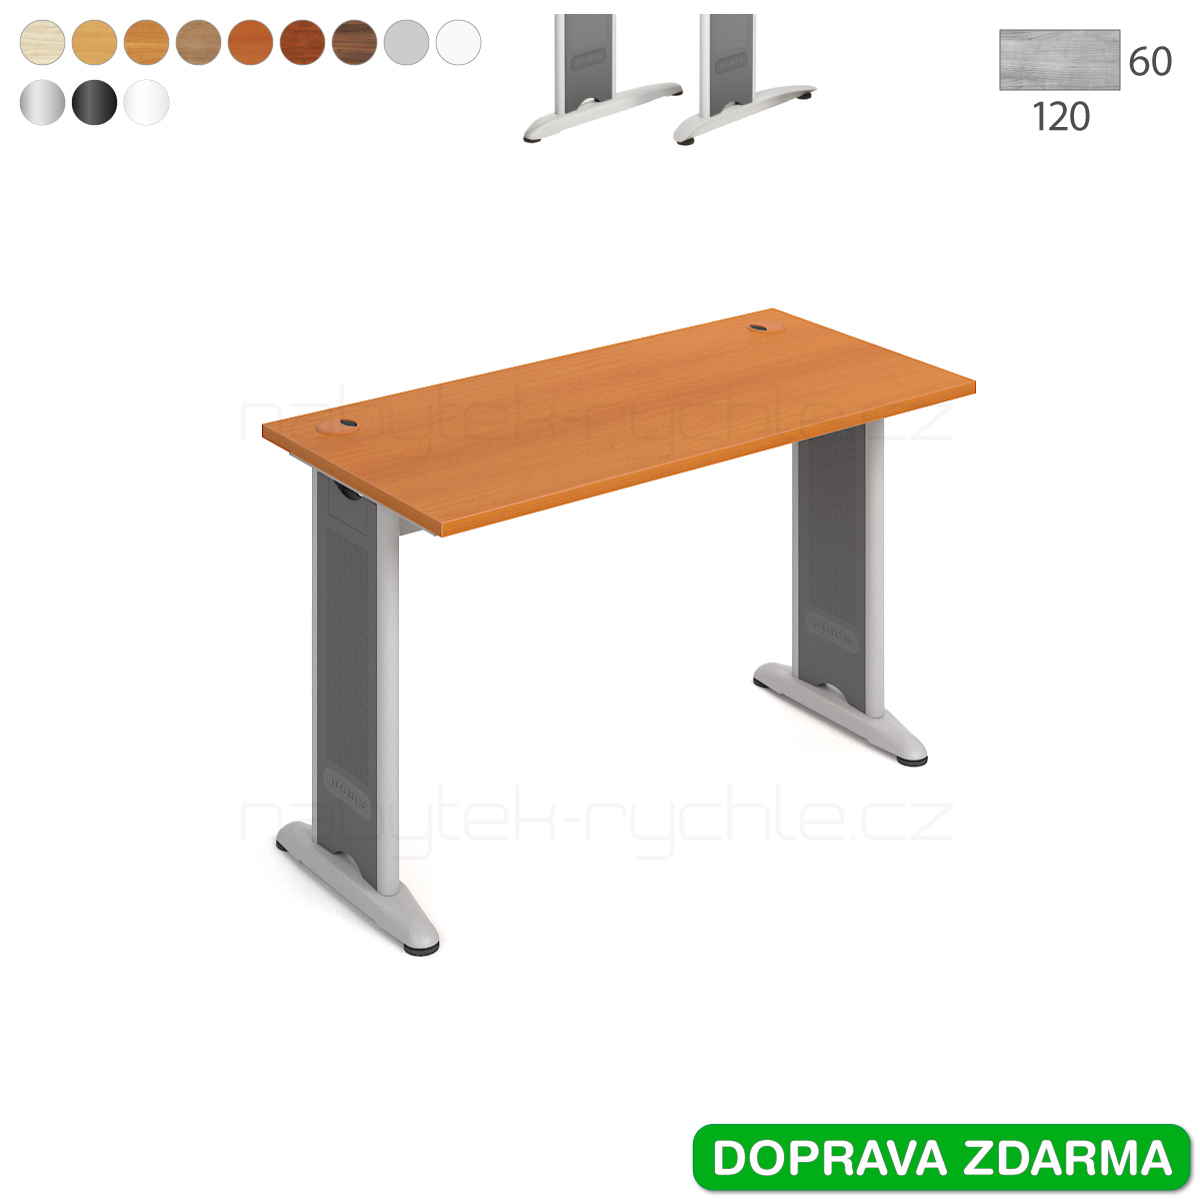 FE 1200 Hobis Flex - Stůl 120 x 60